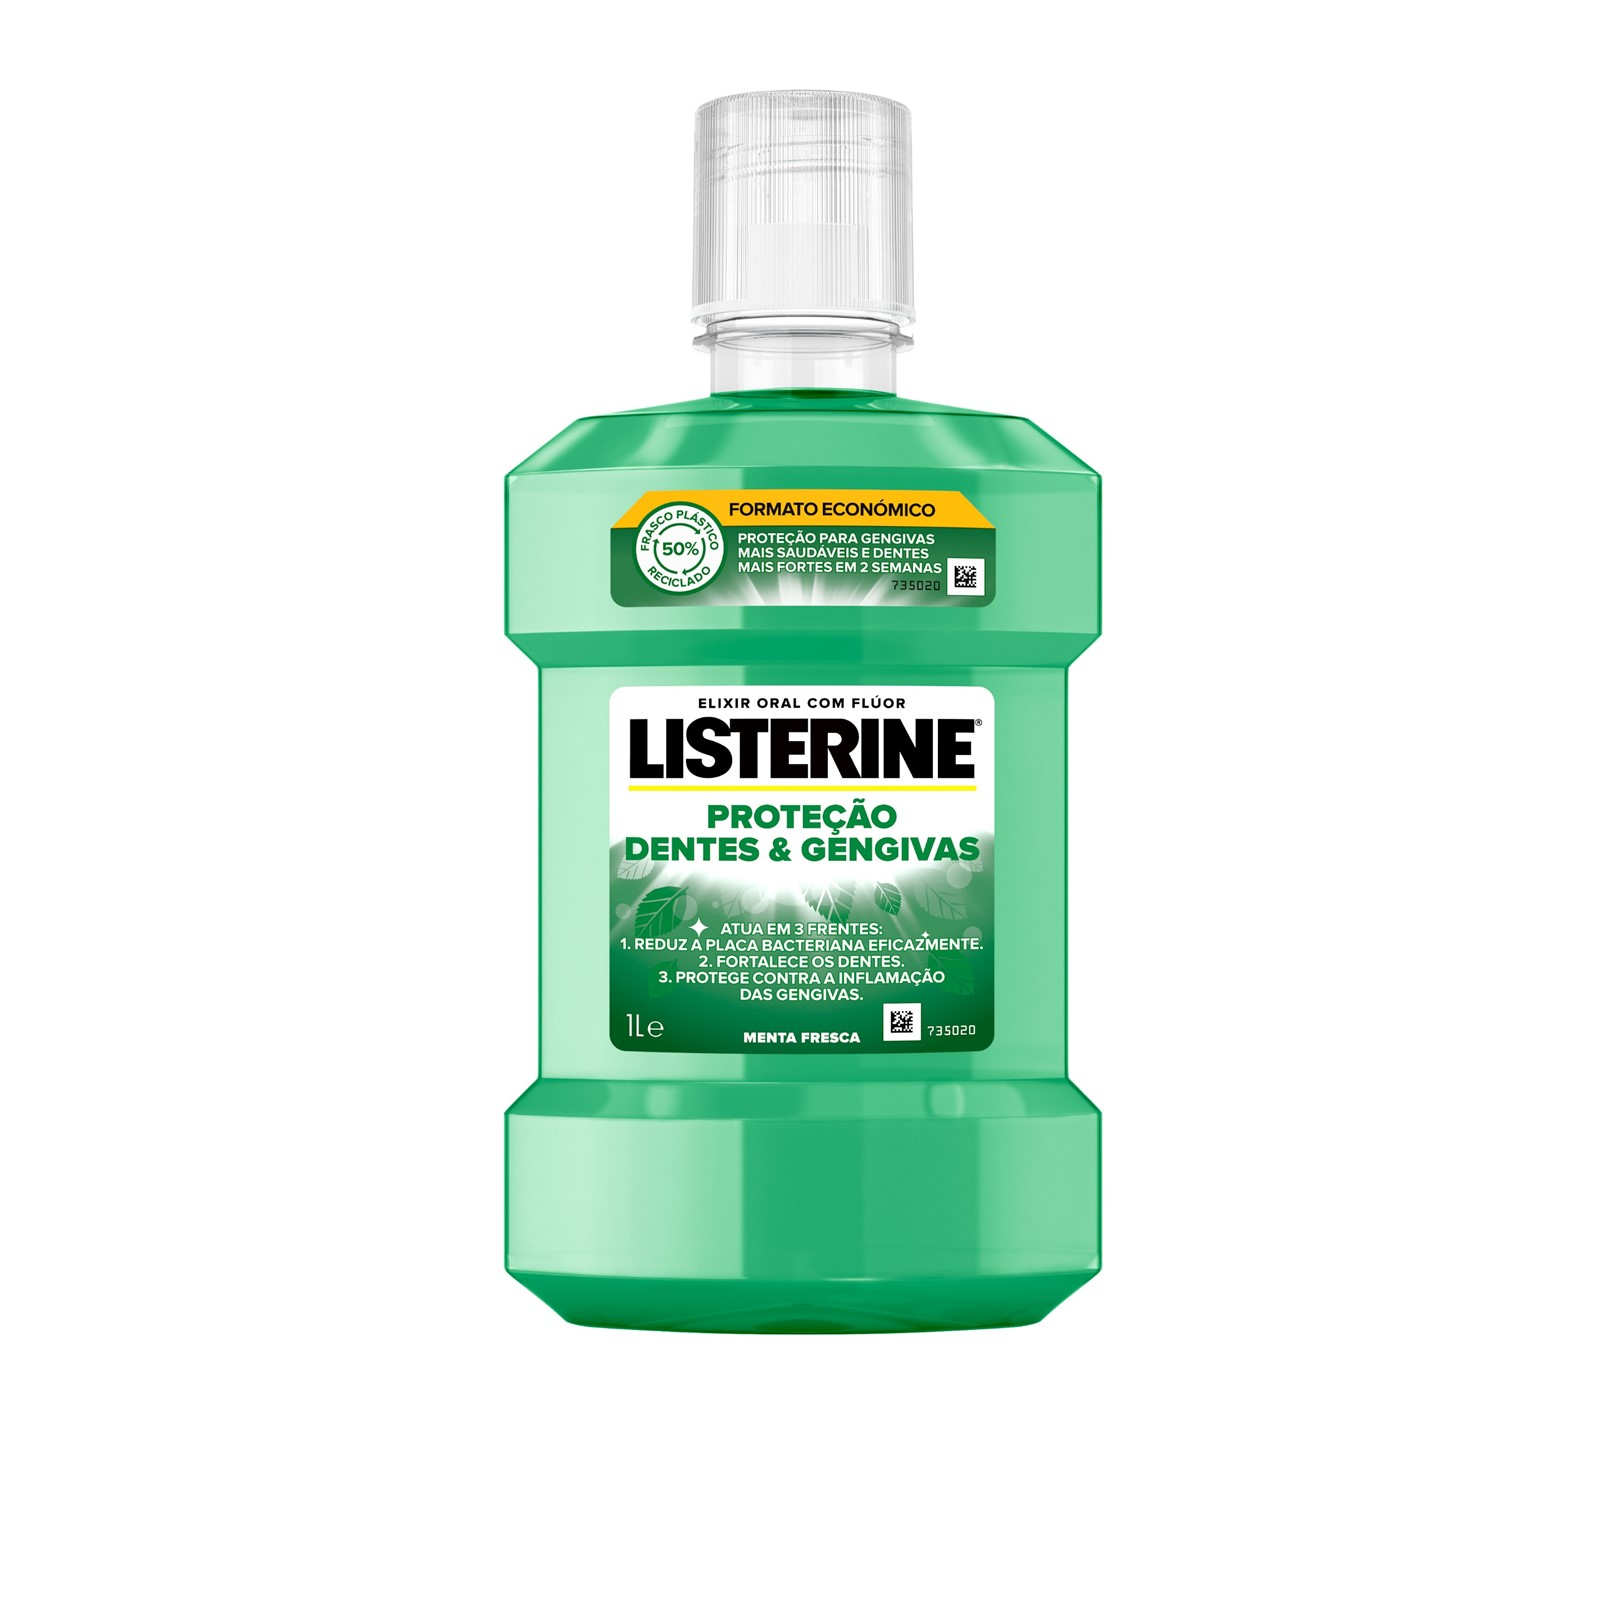 Buy Listerine Teeth And Gum Protection Mouthwash 1L (33.8 fl oz) · USA